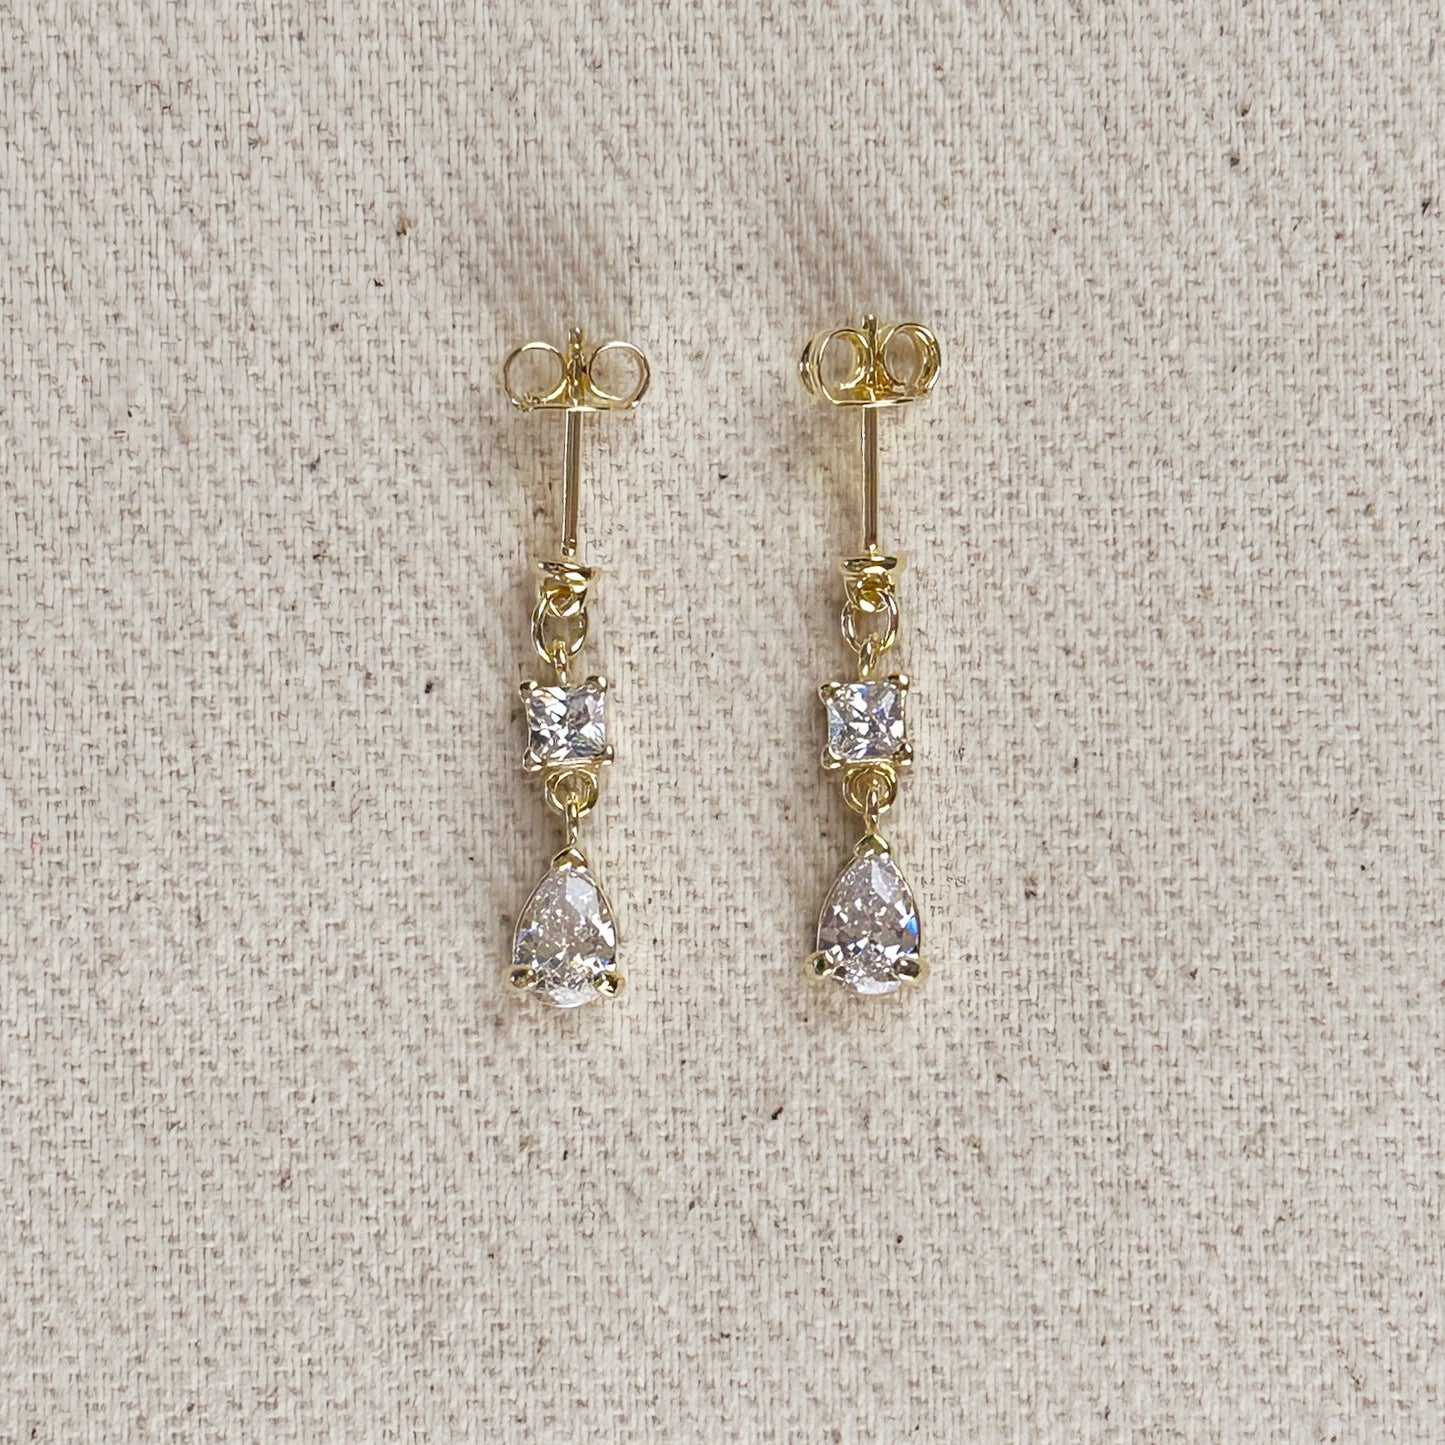 18k Gold Filled Princess Cut and Drop CZ Dangling Earrings